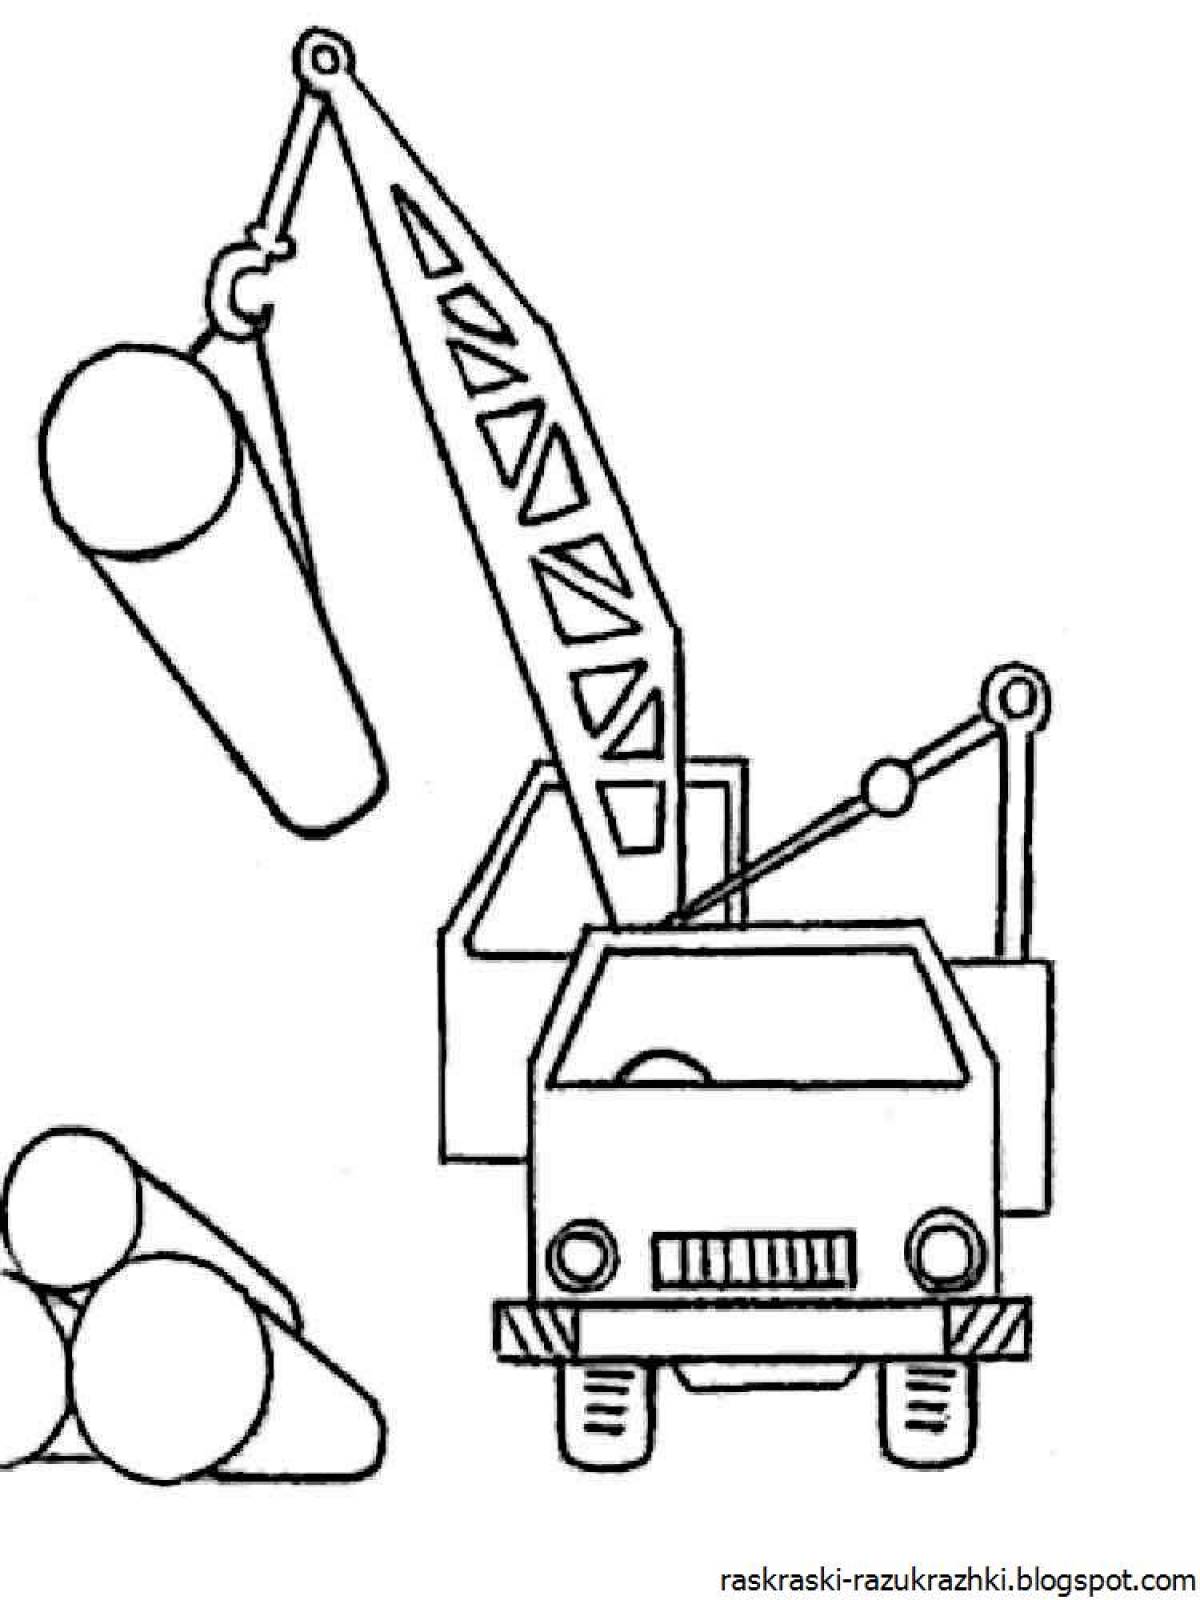 Hoisting crane #13